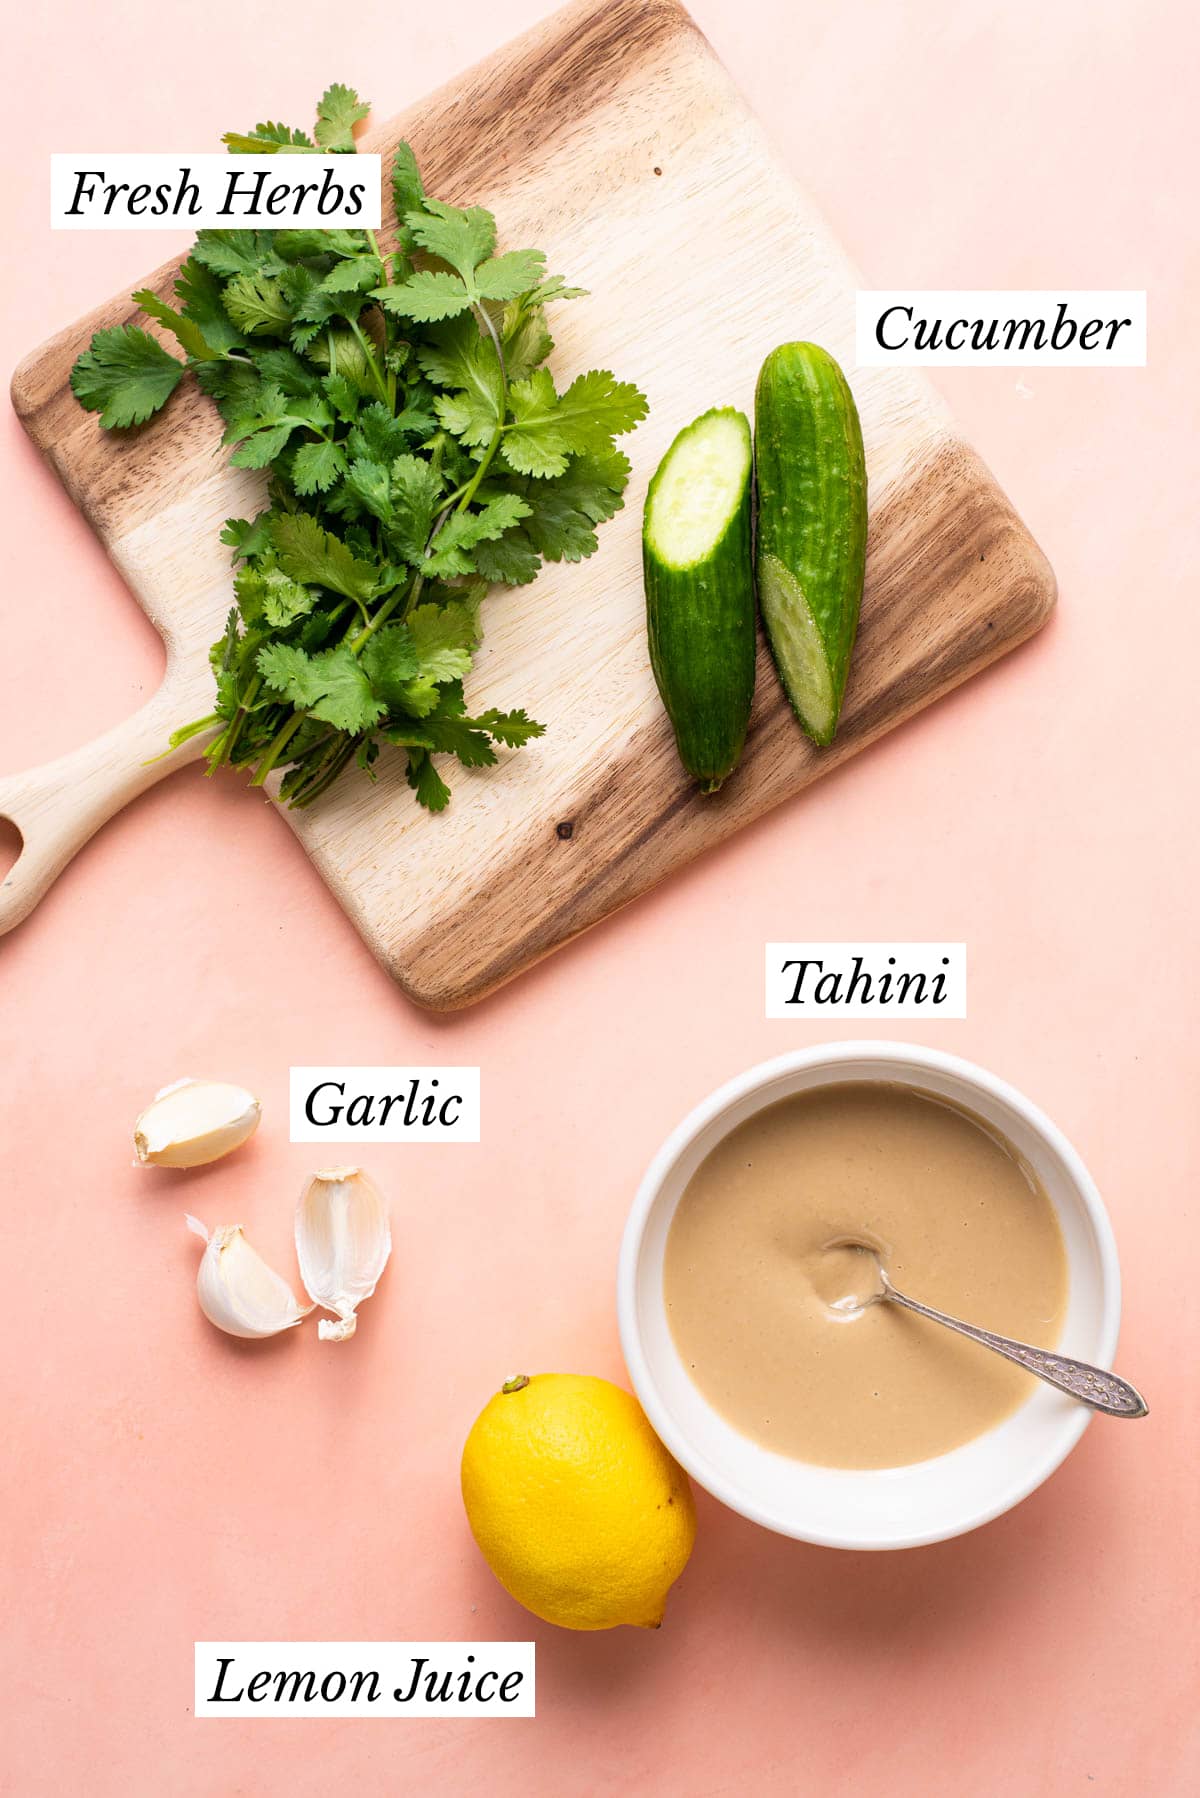 Ingredients gathered to make dairy-free tzatziki sauce with tahini.